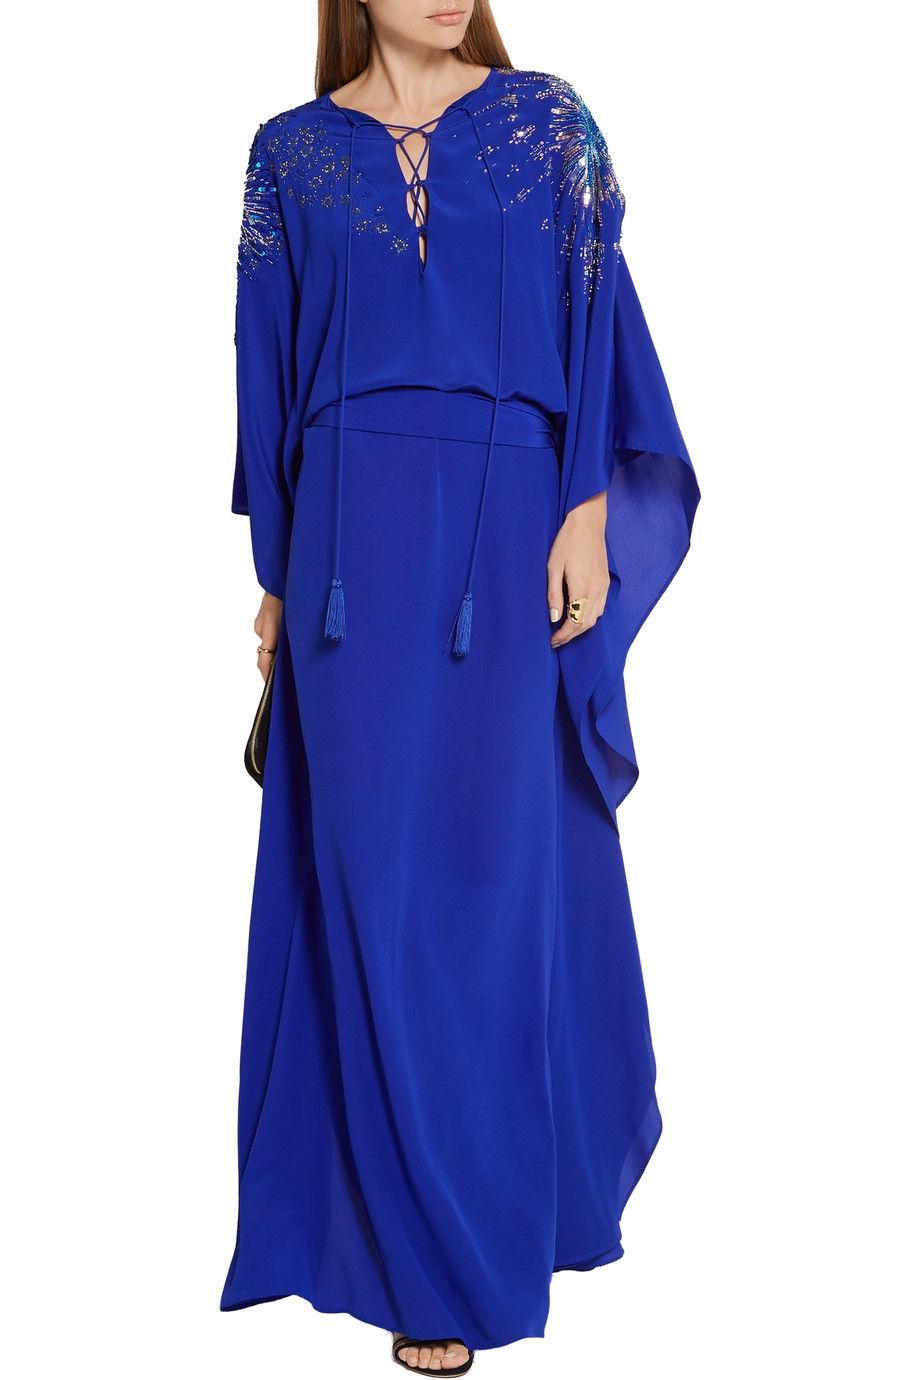 Women's NWT $3650 Roberto Cavalli Blue Silk Firework Embellished Caftan 40 Oversize For Sale